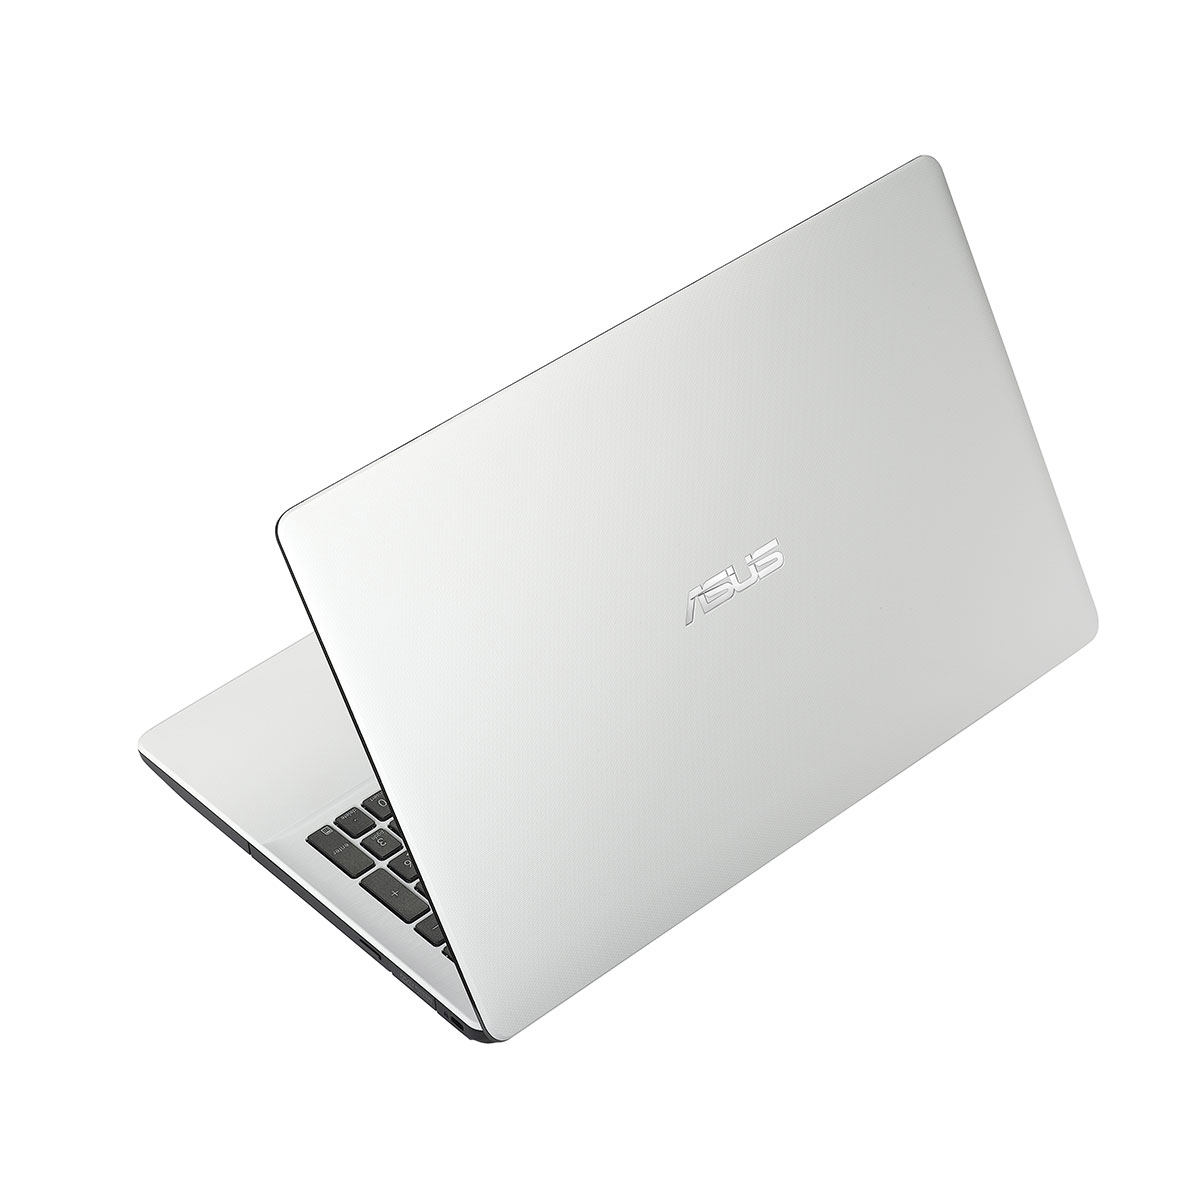 Specs Asus X552ep Sx037h Notebook Ddr3l Sdram 39 6 Cm 15 6 1366 X 768 Pixels Amd E 6 Gb 1000 Gb Hdd Amd Radeon Hd 8670m Windows 8 Black White X552ep Sx037h